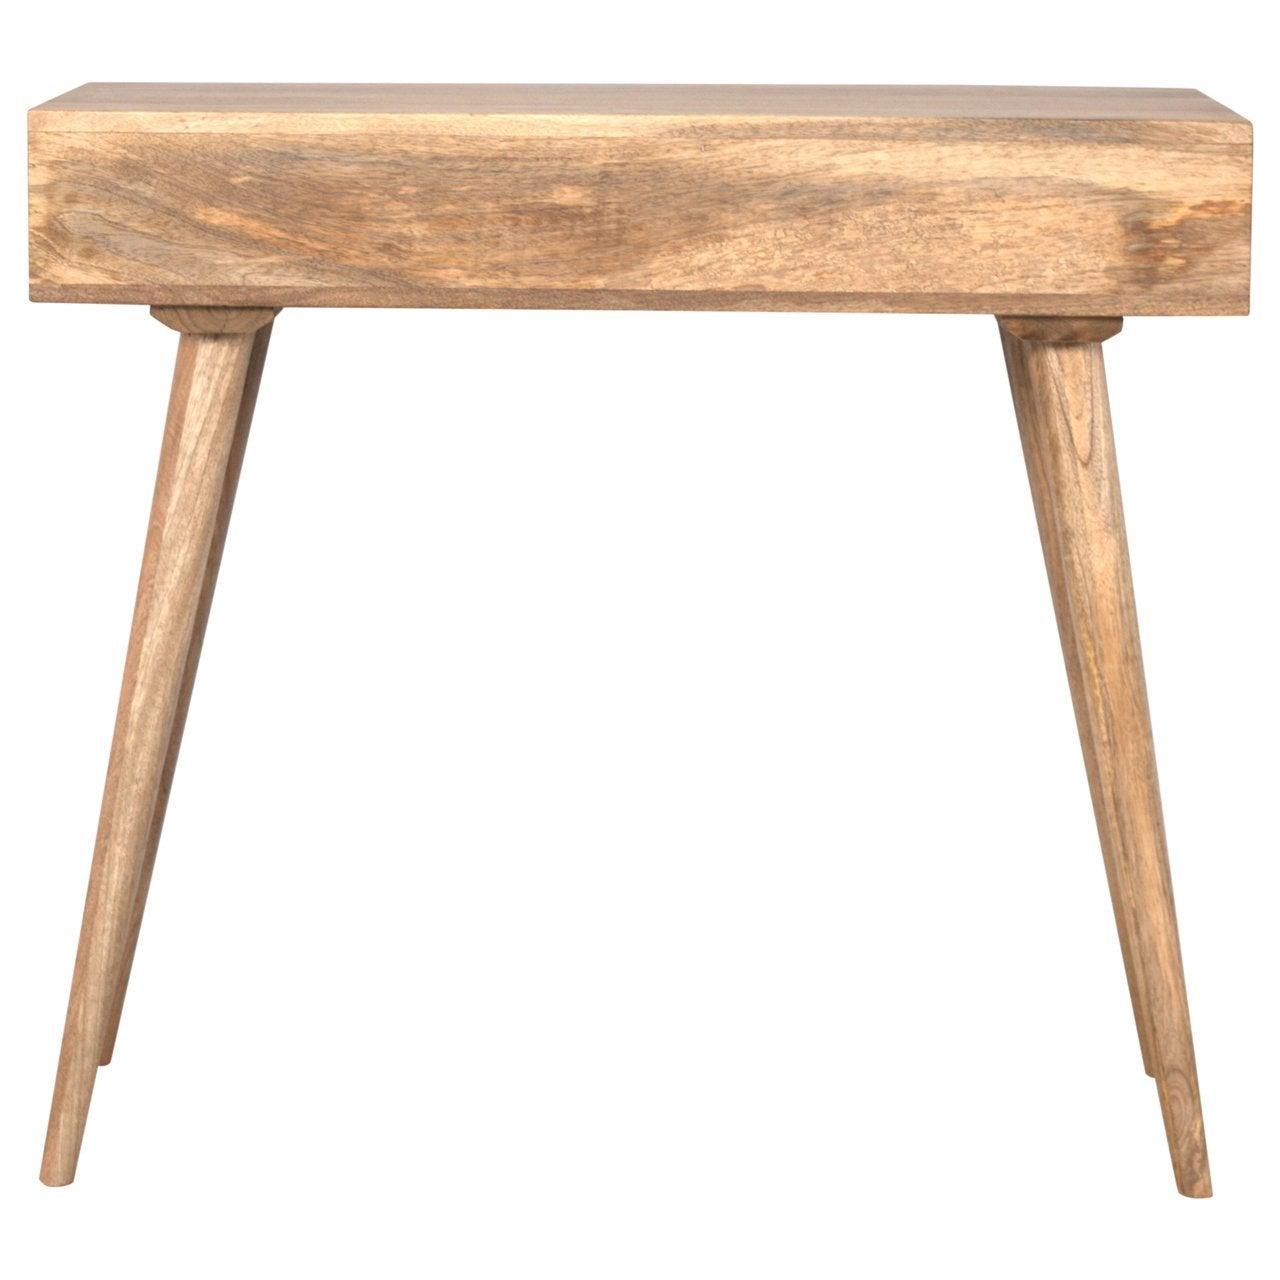 Solid wood writing desk with open slot - crimblefest furniture - image 4